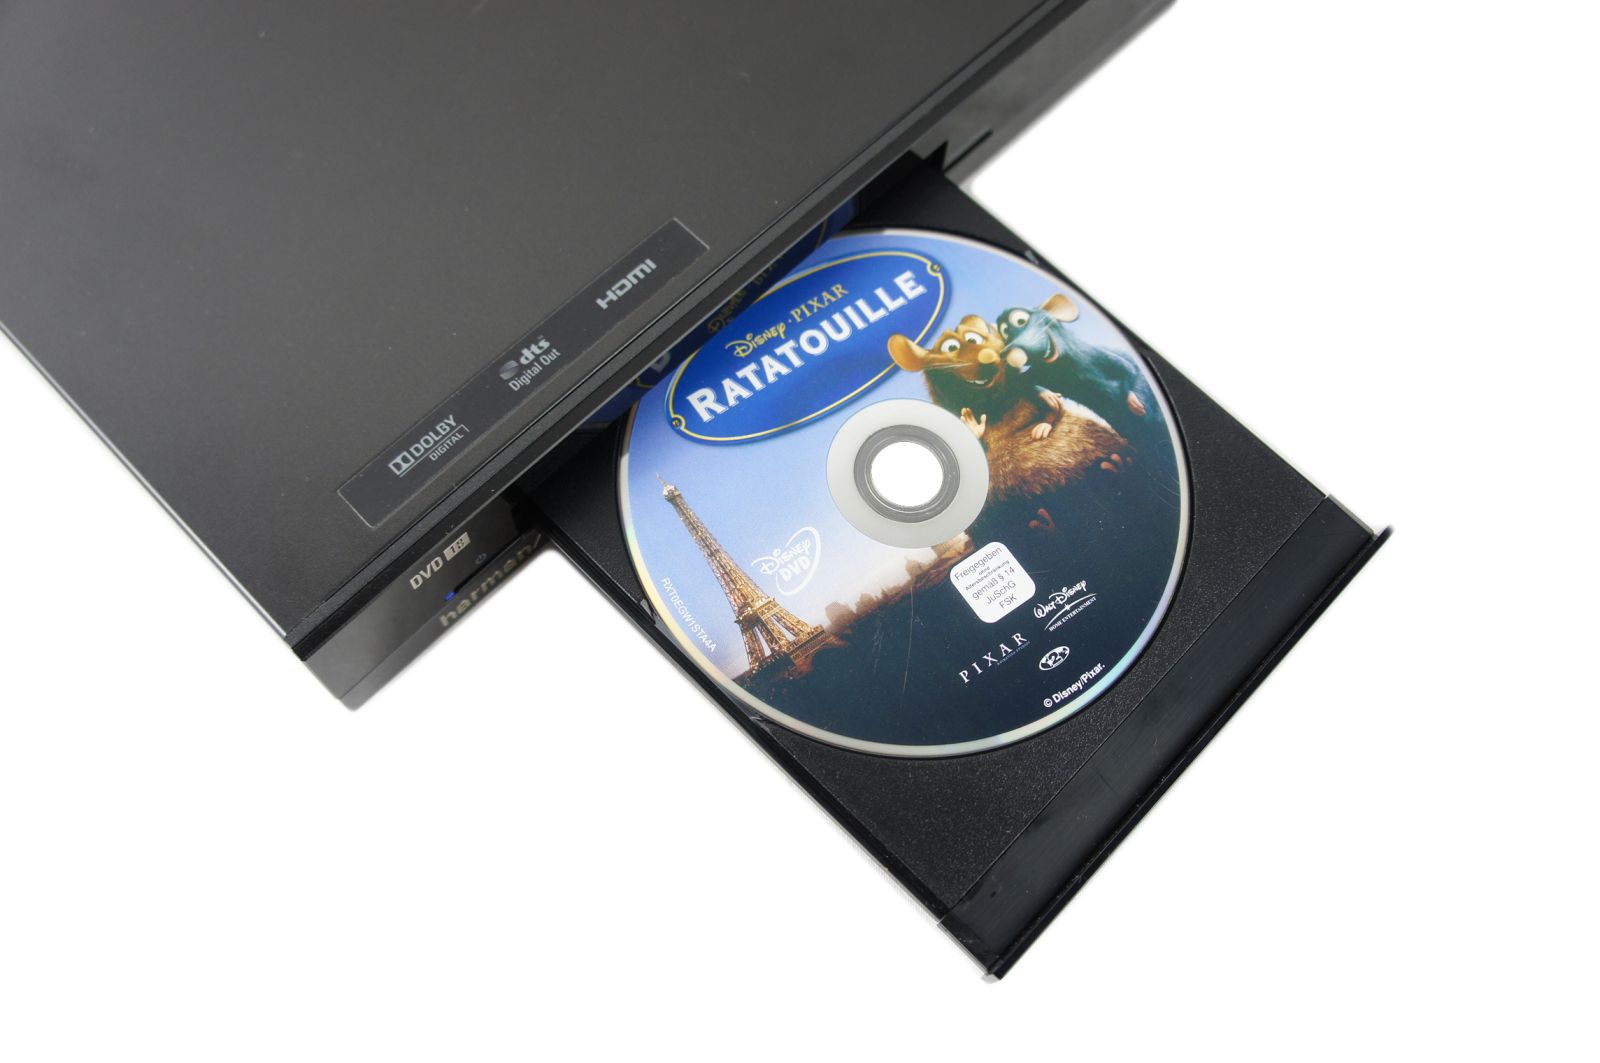 Harman_Kardon_DVD_18_DVD_Player